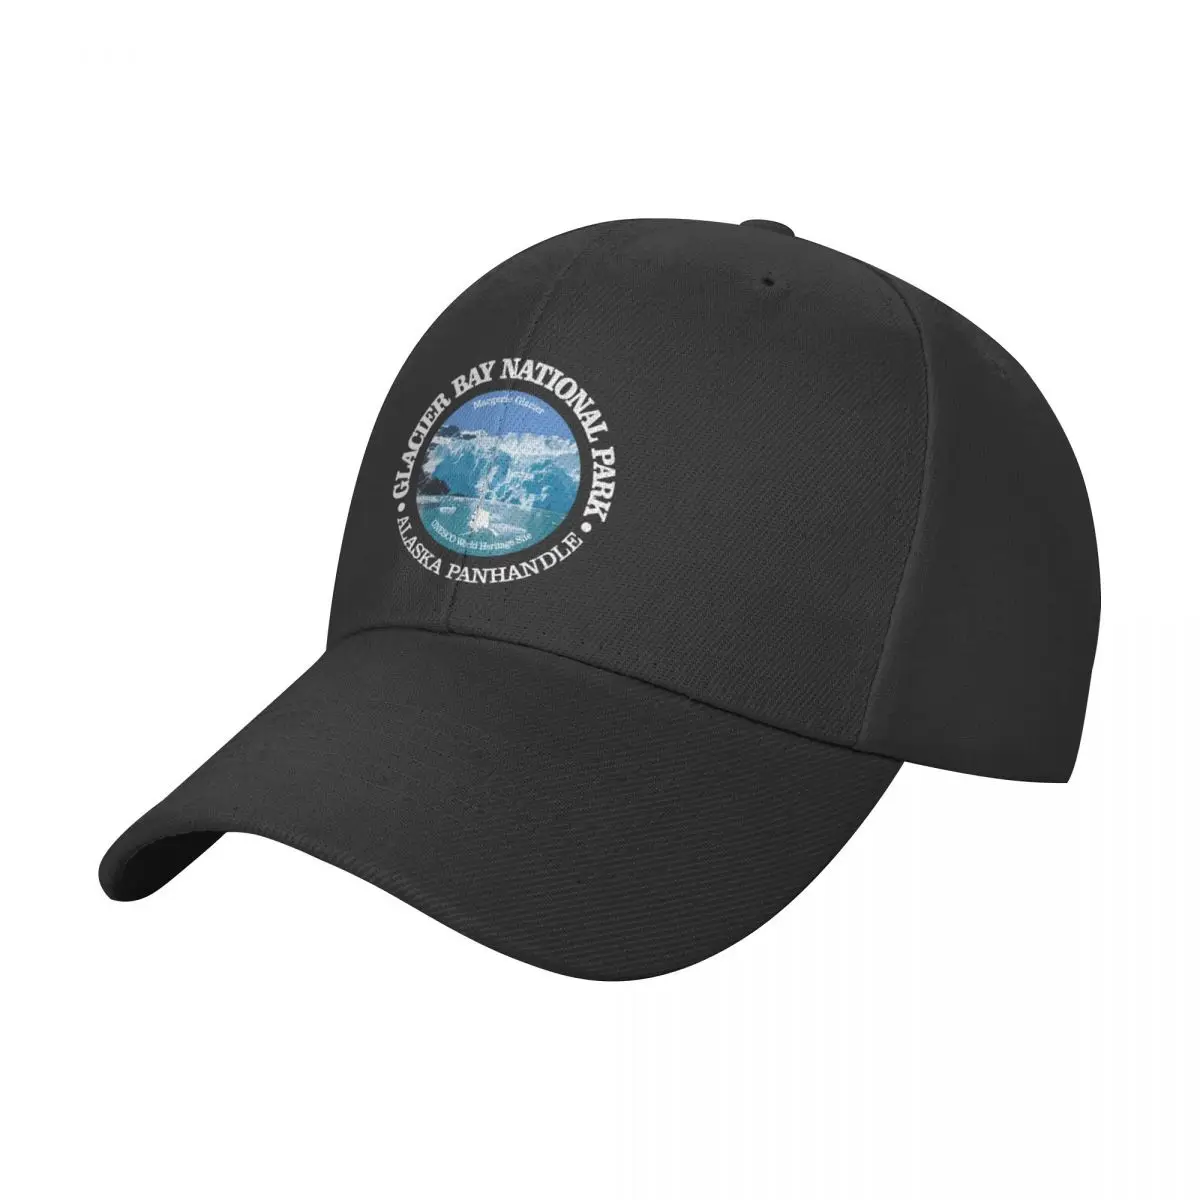 

Glacier Bay National Park (NP) Baseball Cap Mountaineering hard hat Brand Man Caps Golf Hat Caps For Women Men's